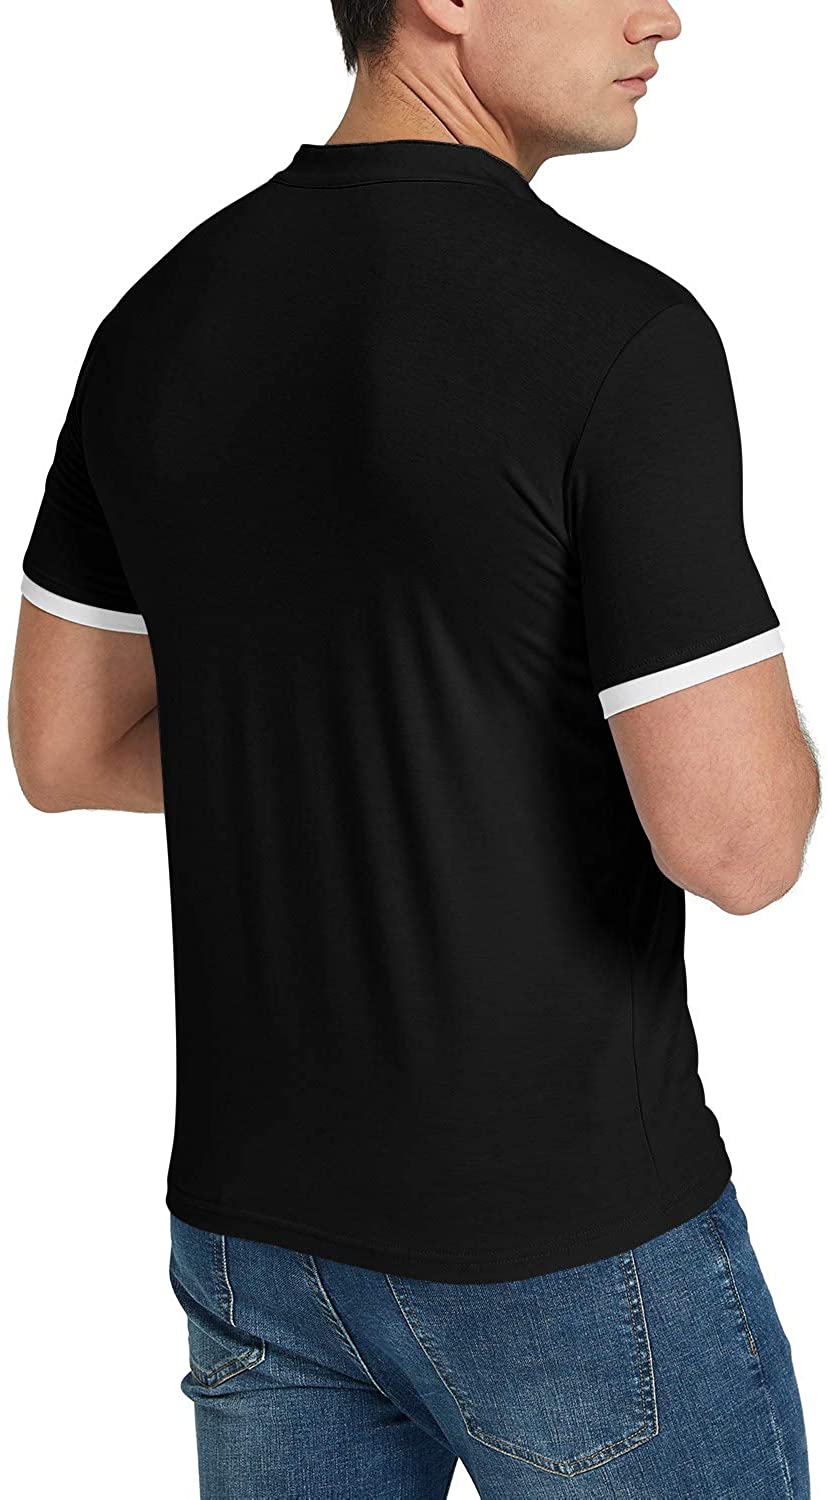 KUYIGO Mens Polo Shirt Short Sleeve Classic Sports Top Casual Workout Sports Shirts